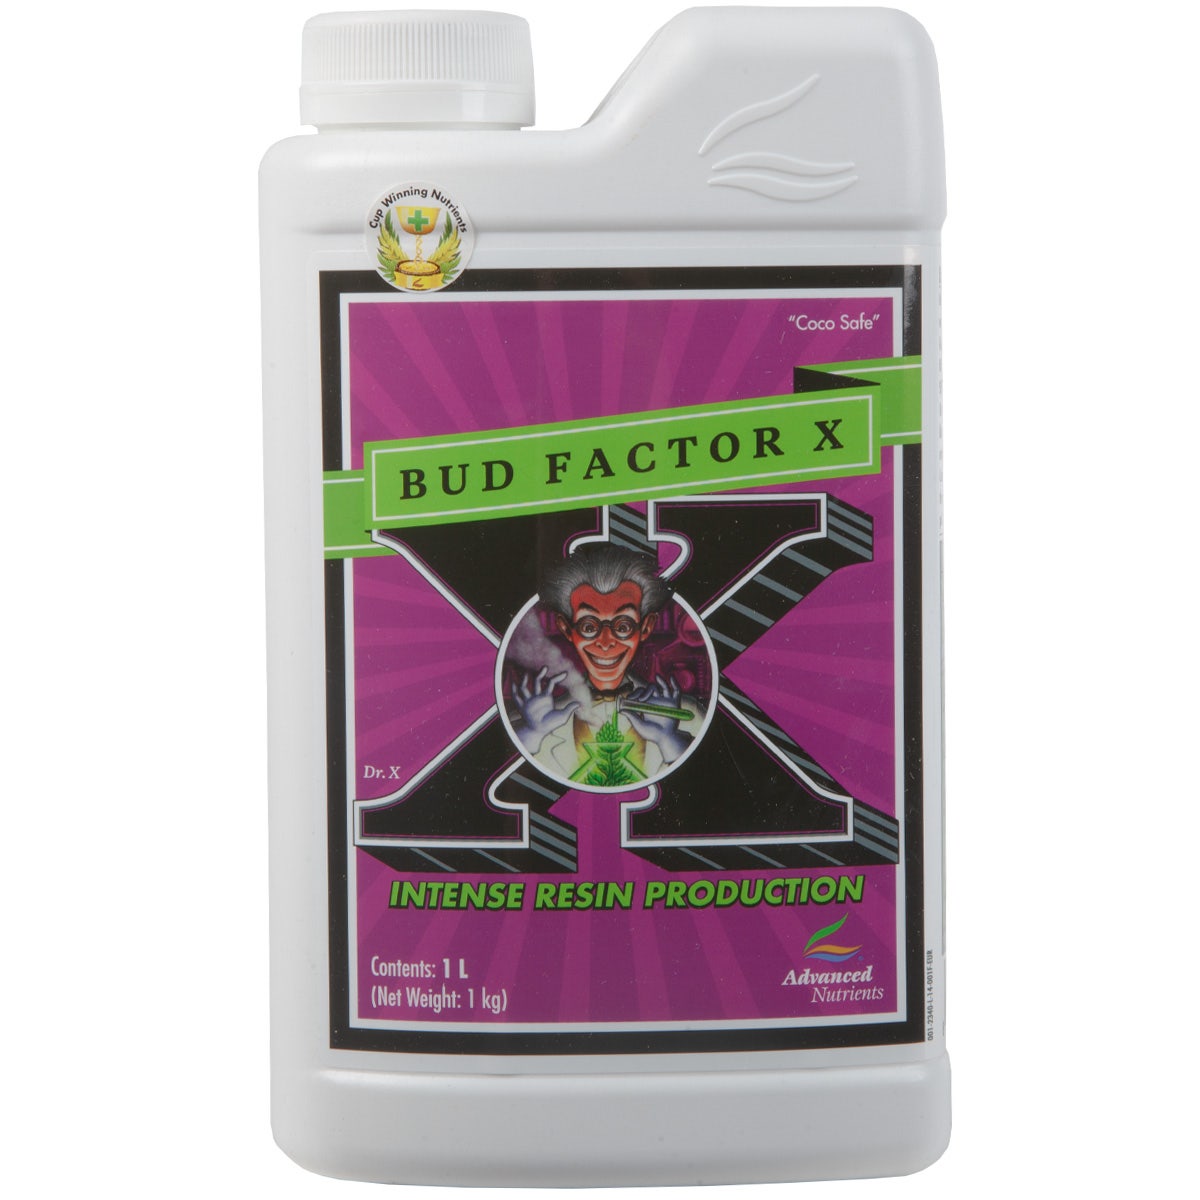 Advanced Nutrients - Bud Factor X